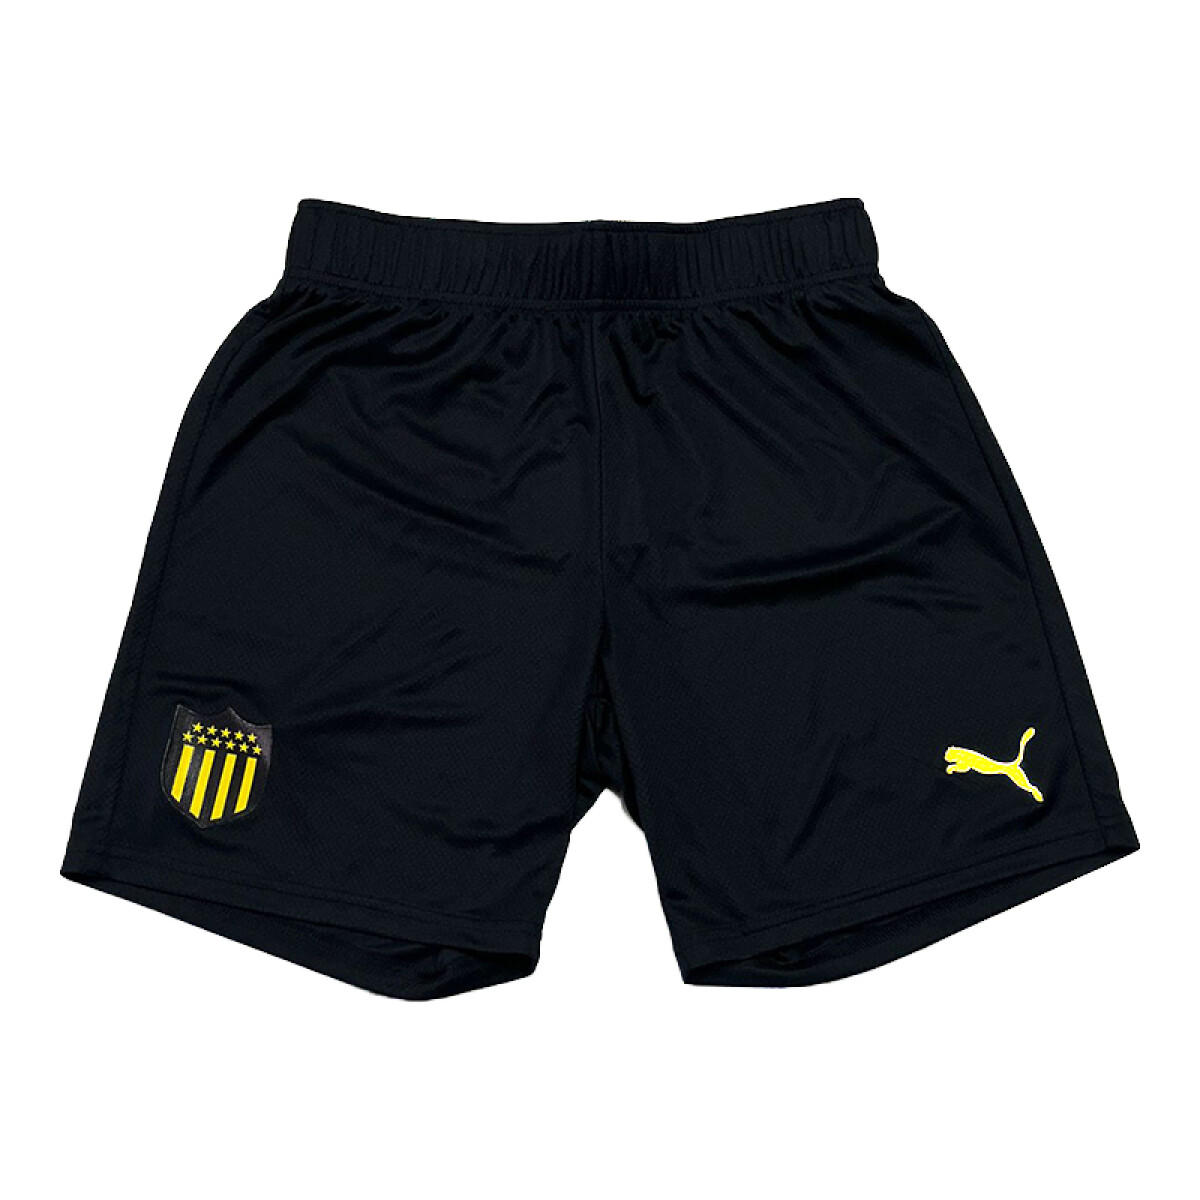 Peñarol home shorts 23-77532201 - Negro 